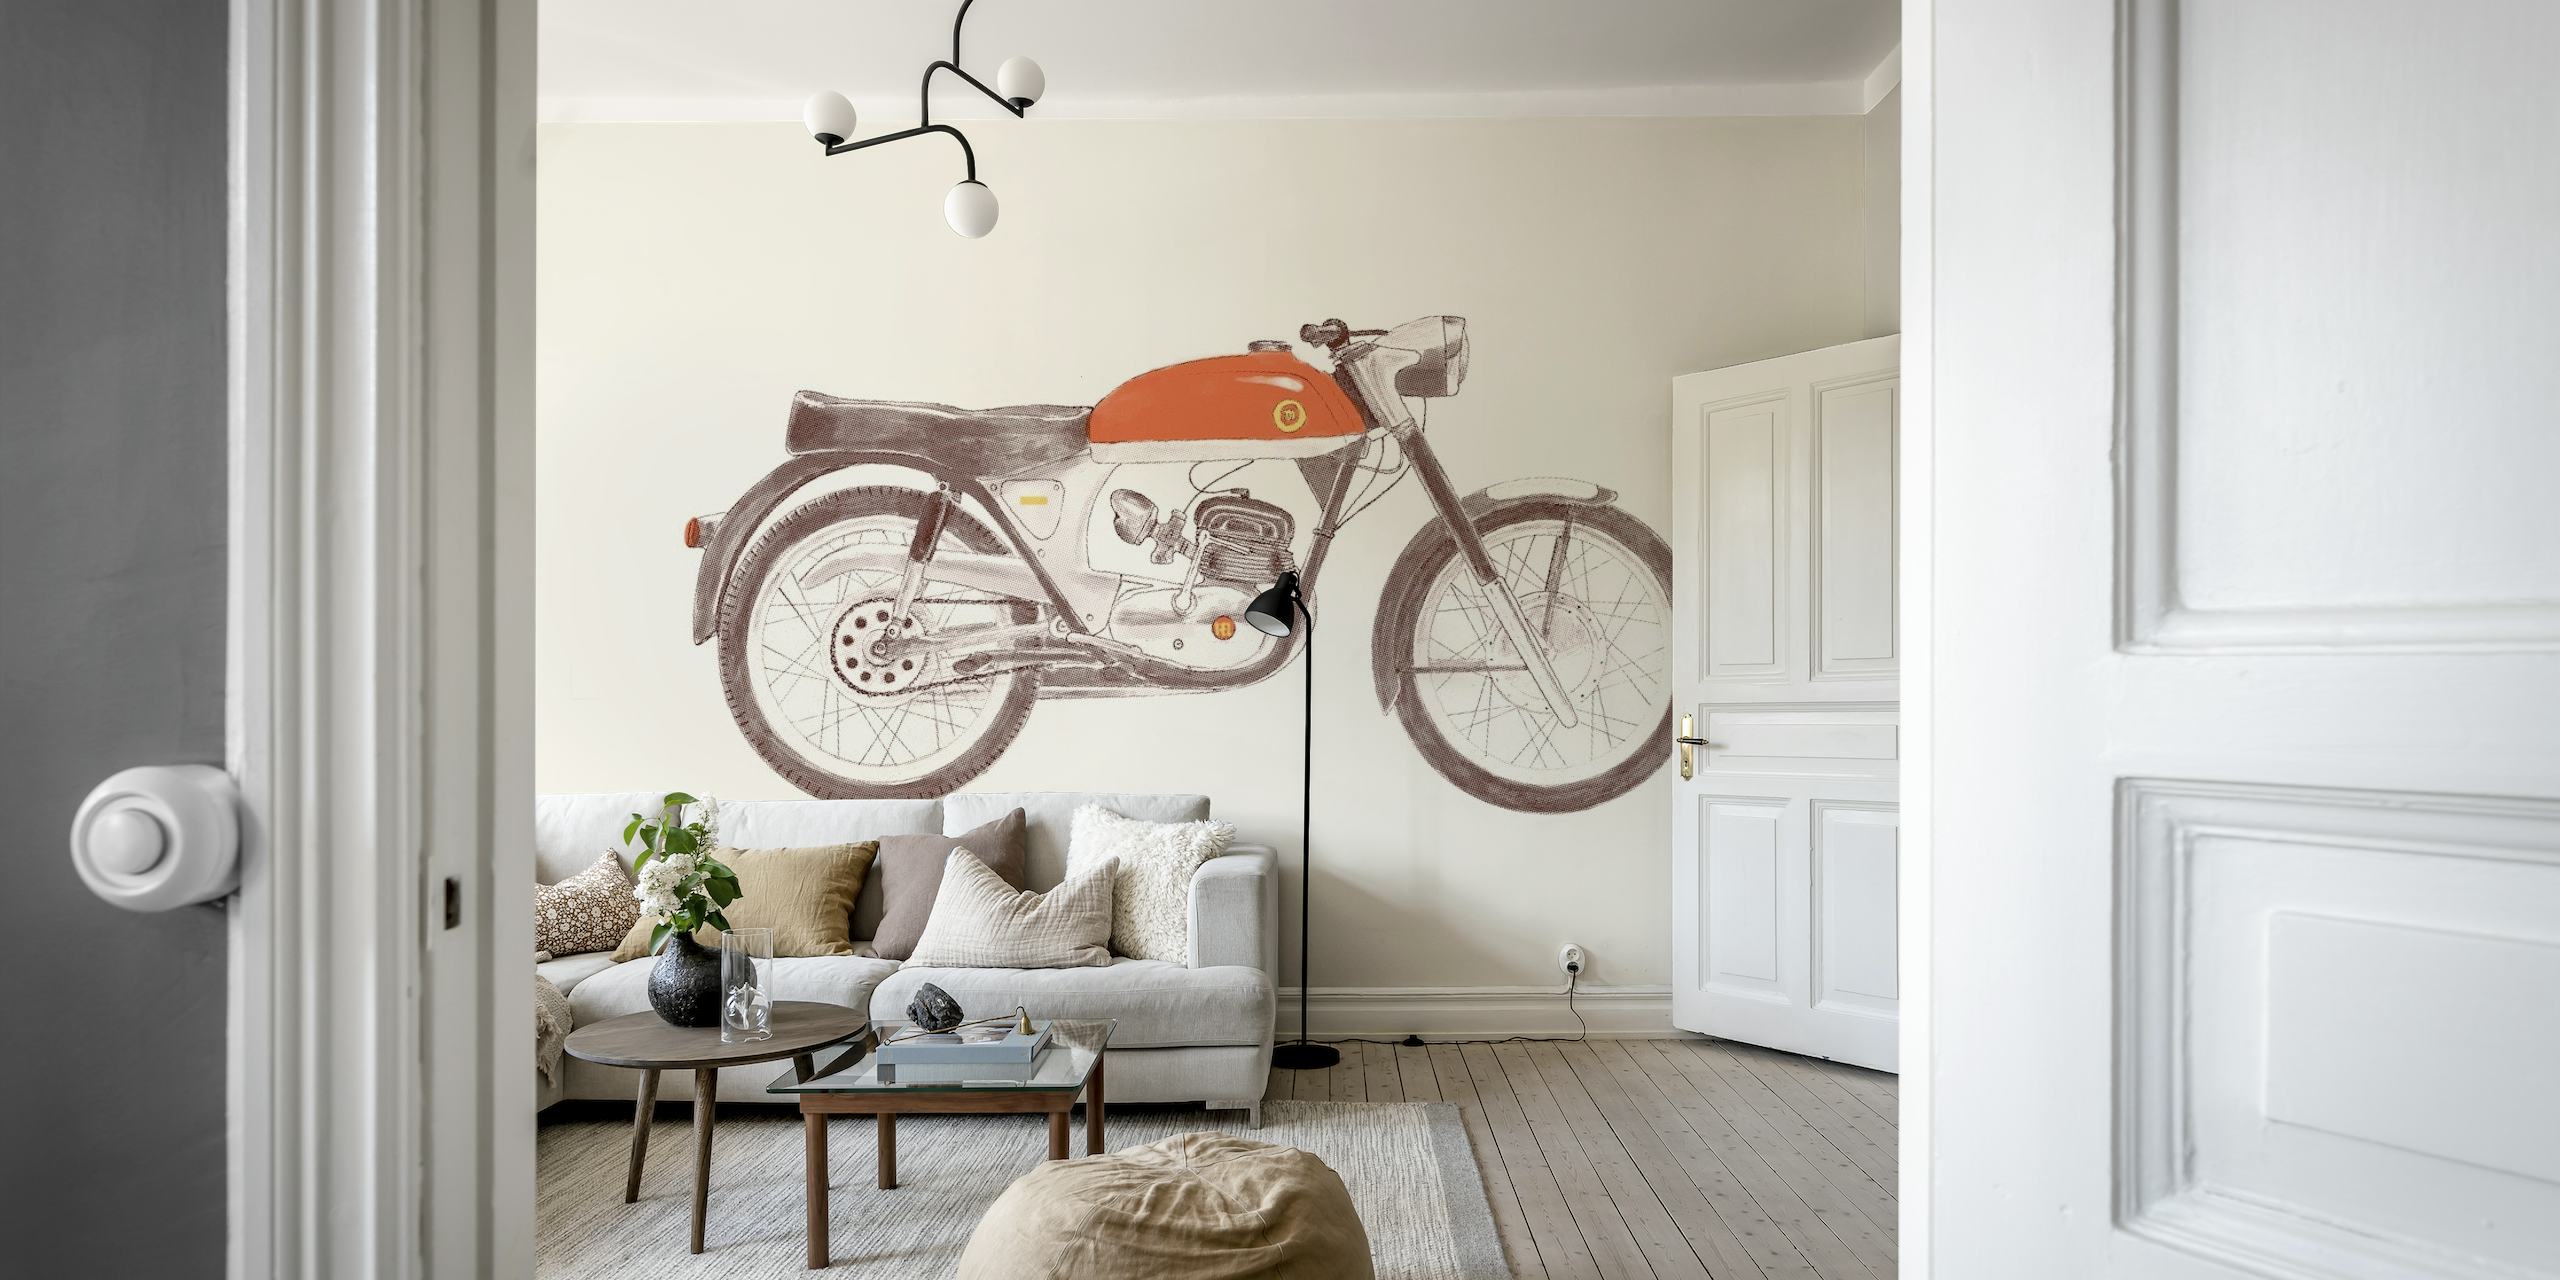 Moto wallpaper